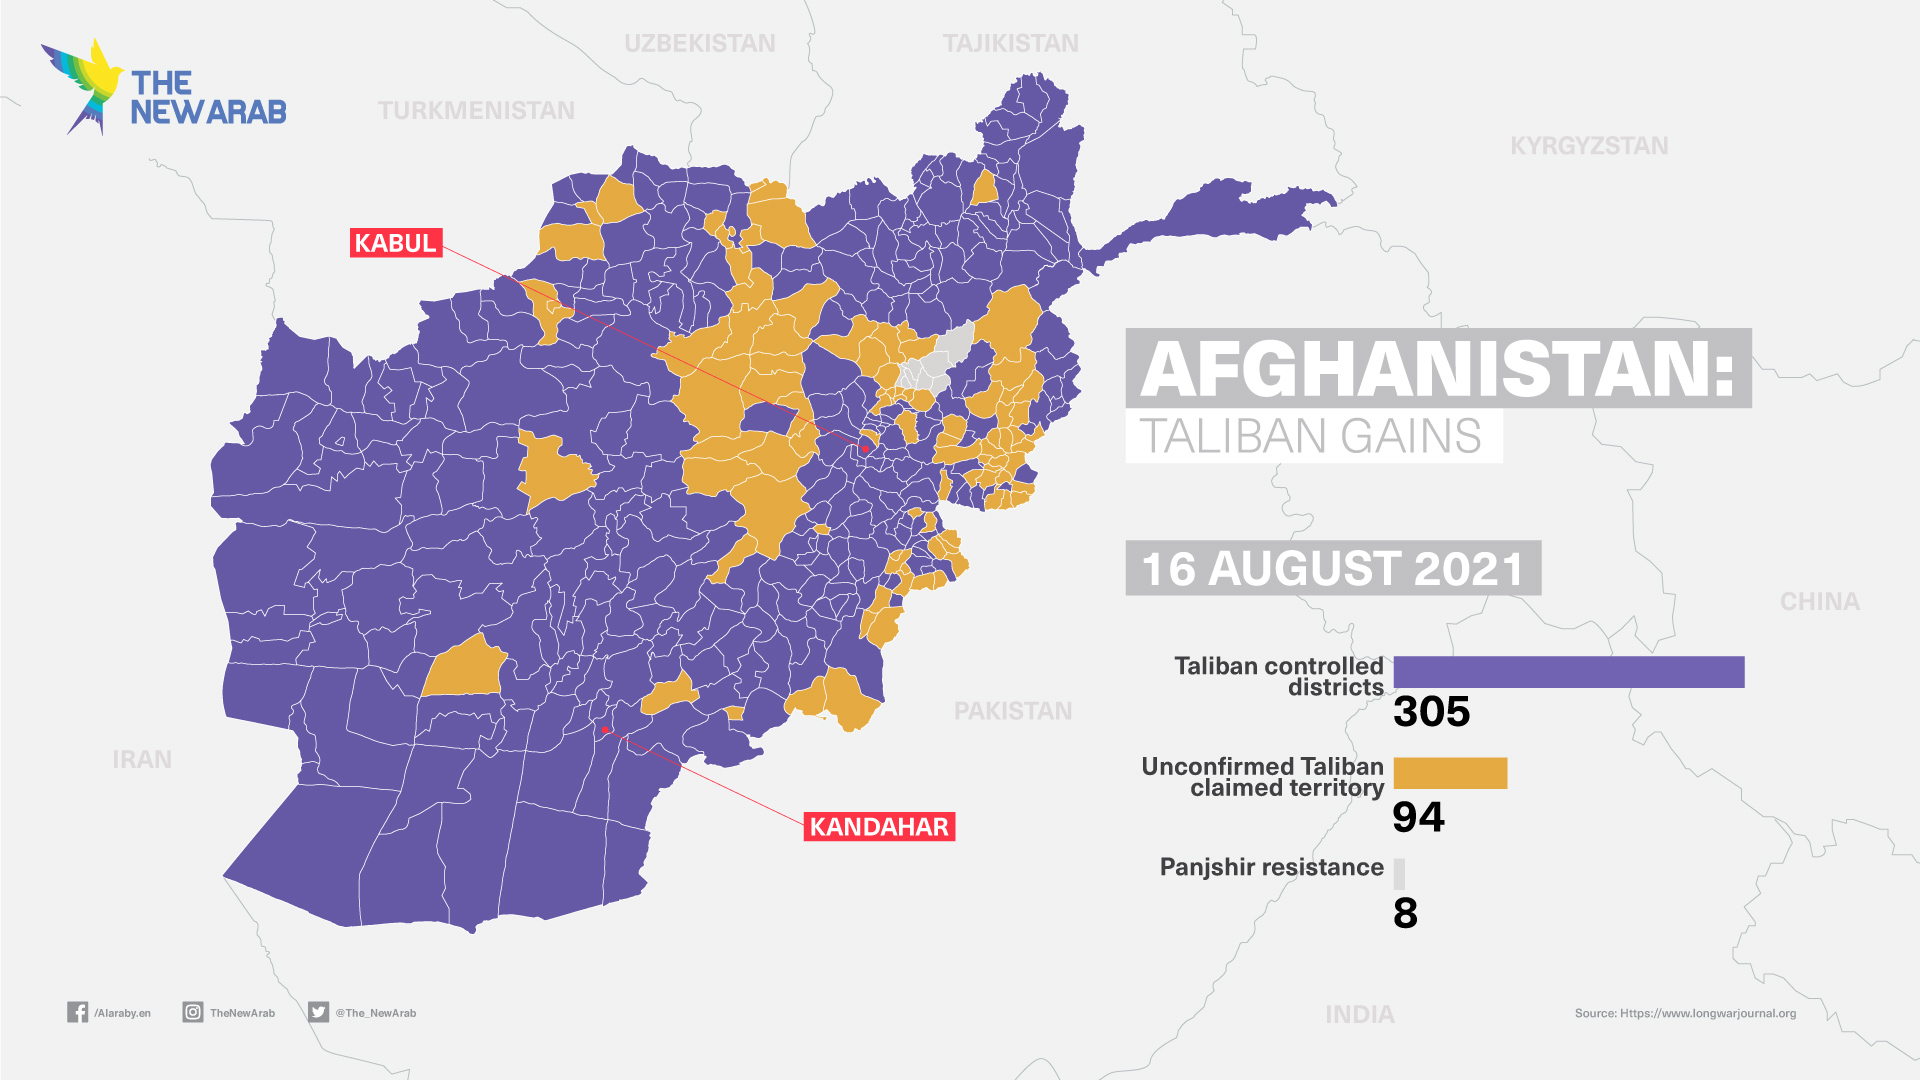 Afghanistan: Taliban gains (16 August 2021)